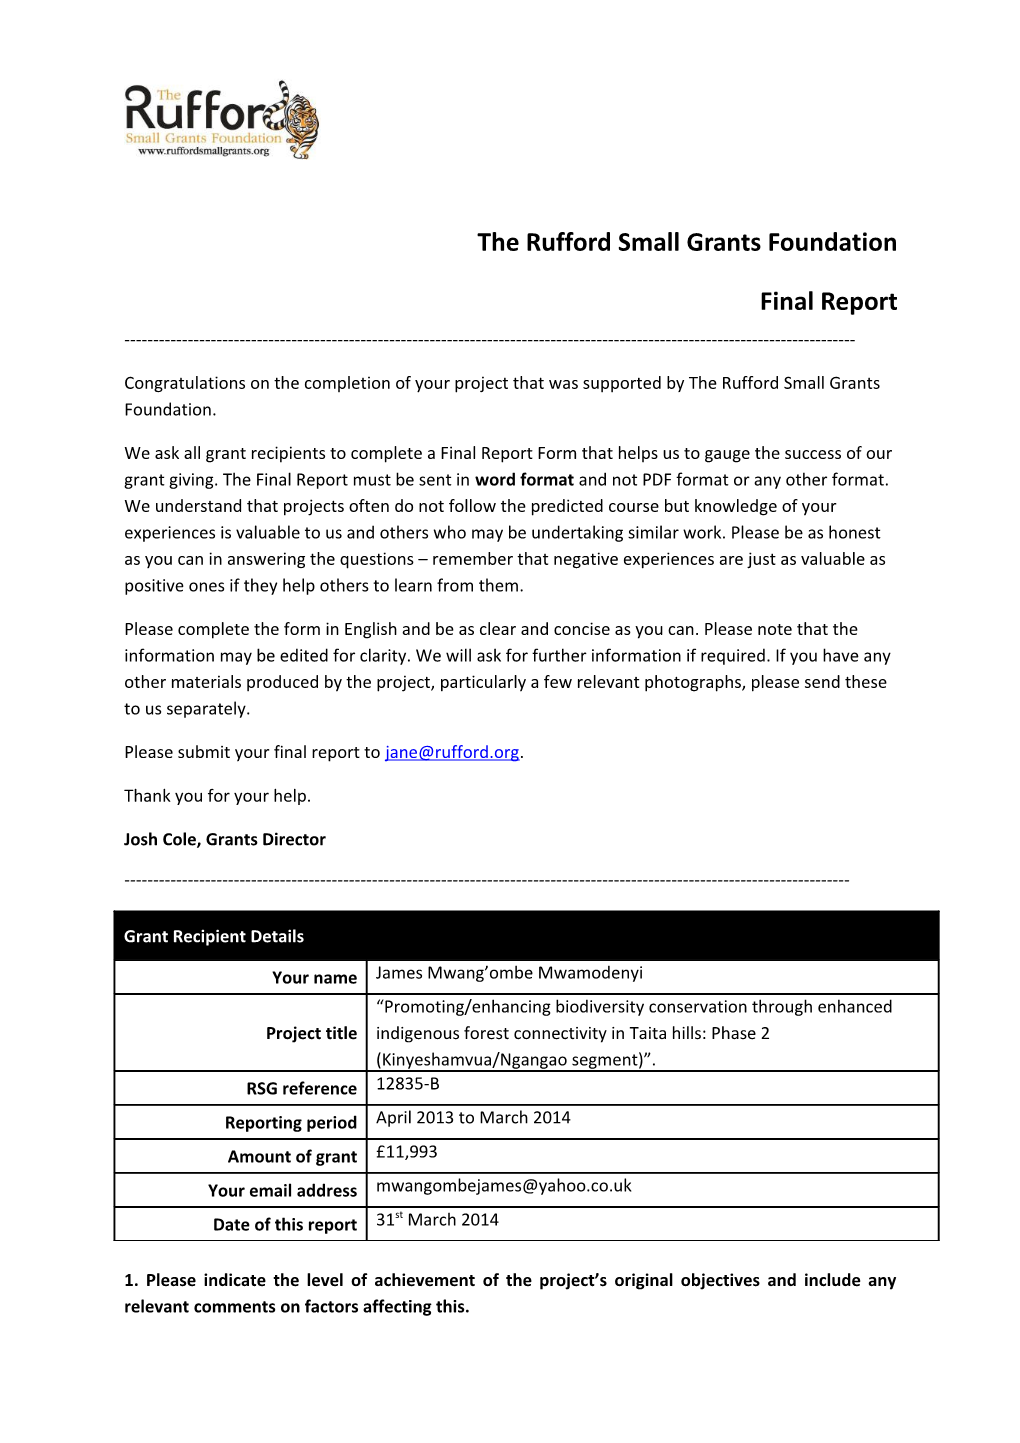 The Rufford Small Grants Foundation s45